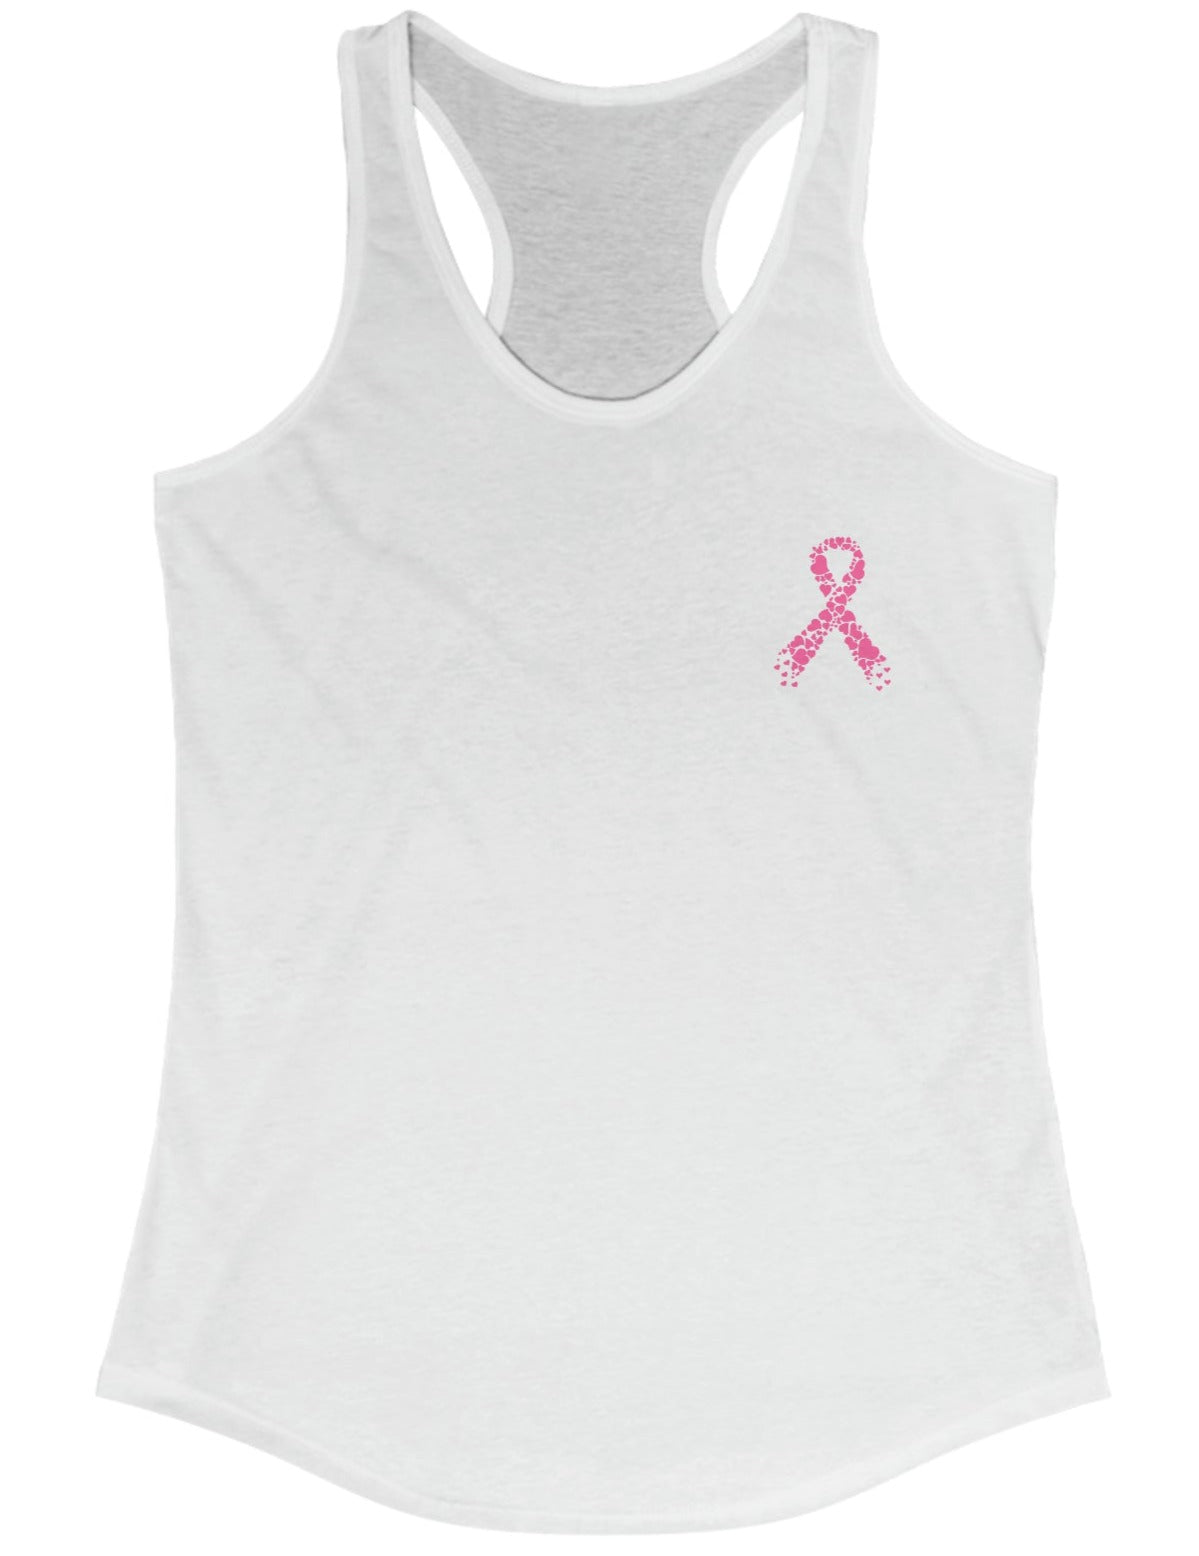 Subtle Breast Cancer Awareness Women's Racerback Tank